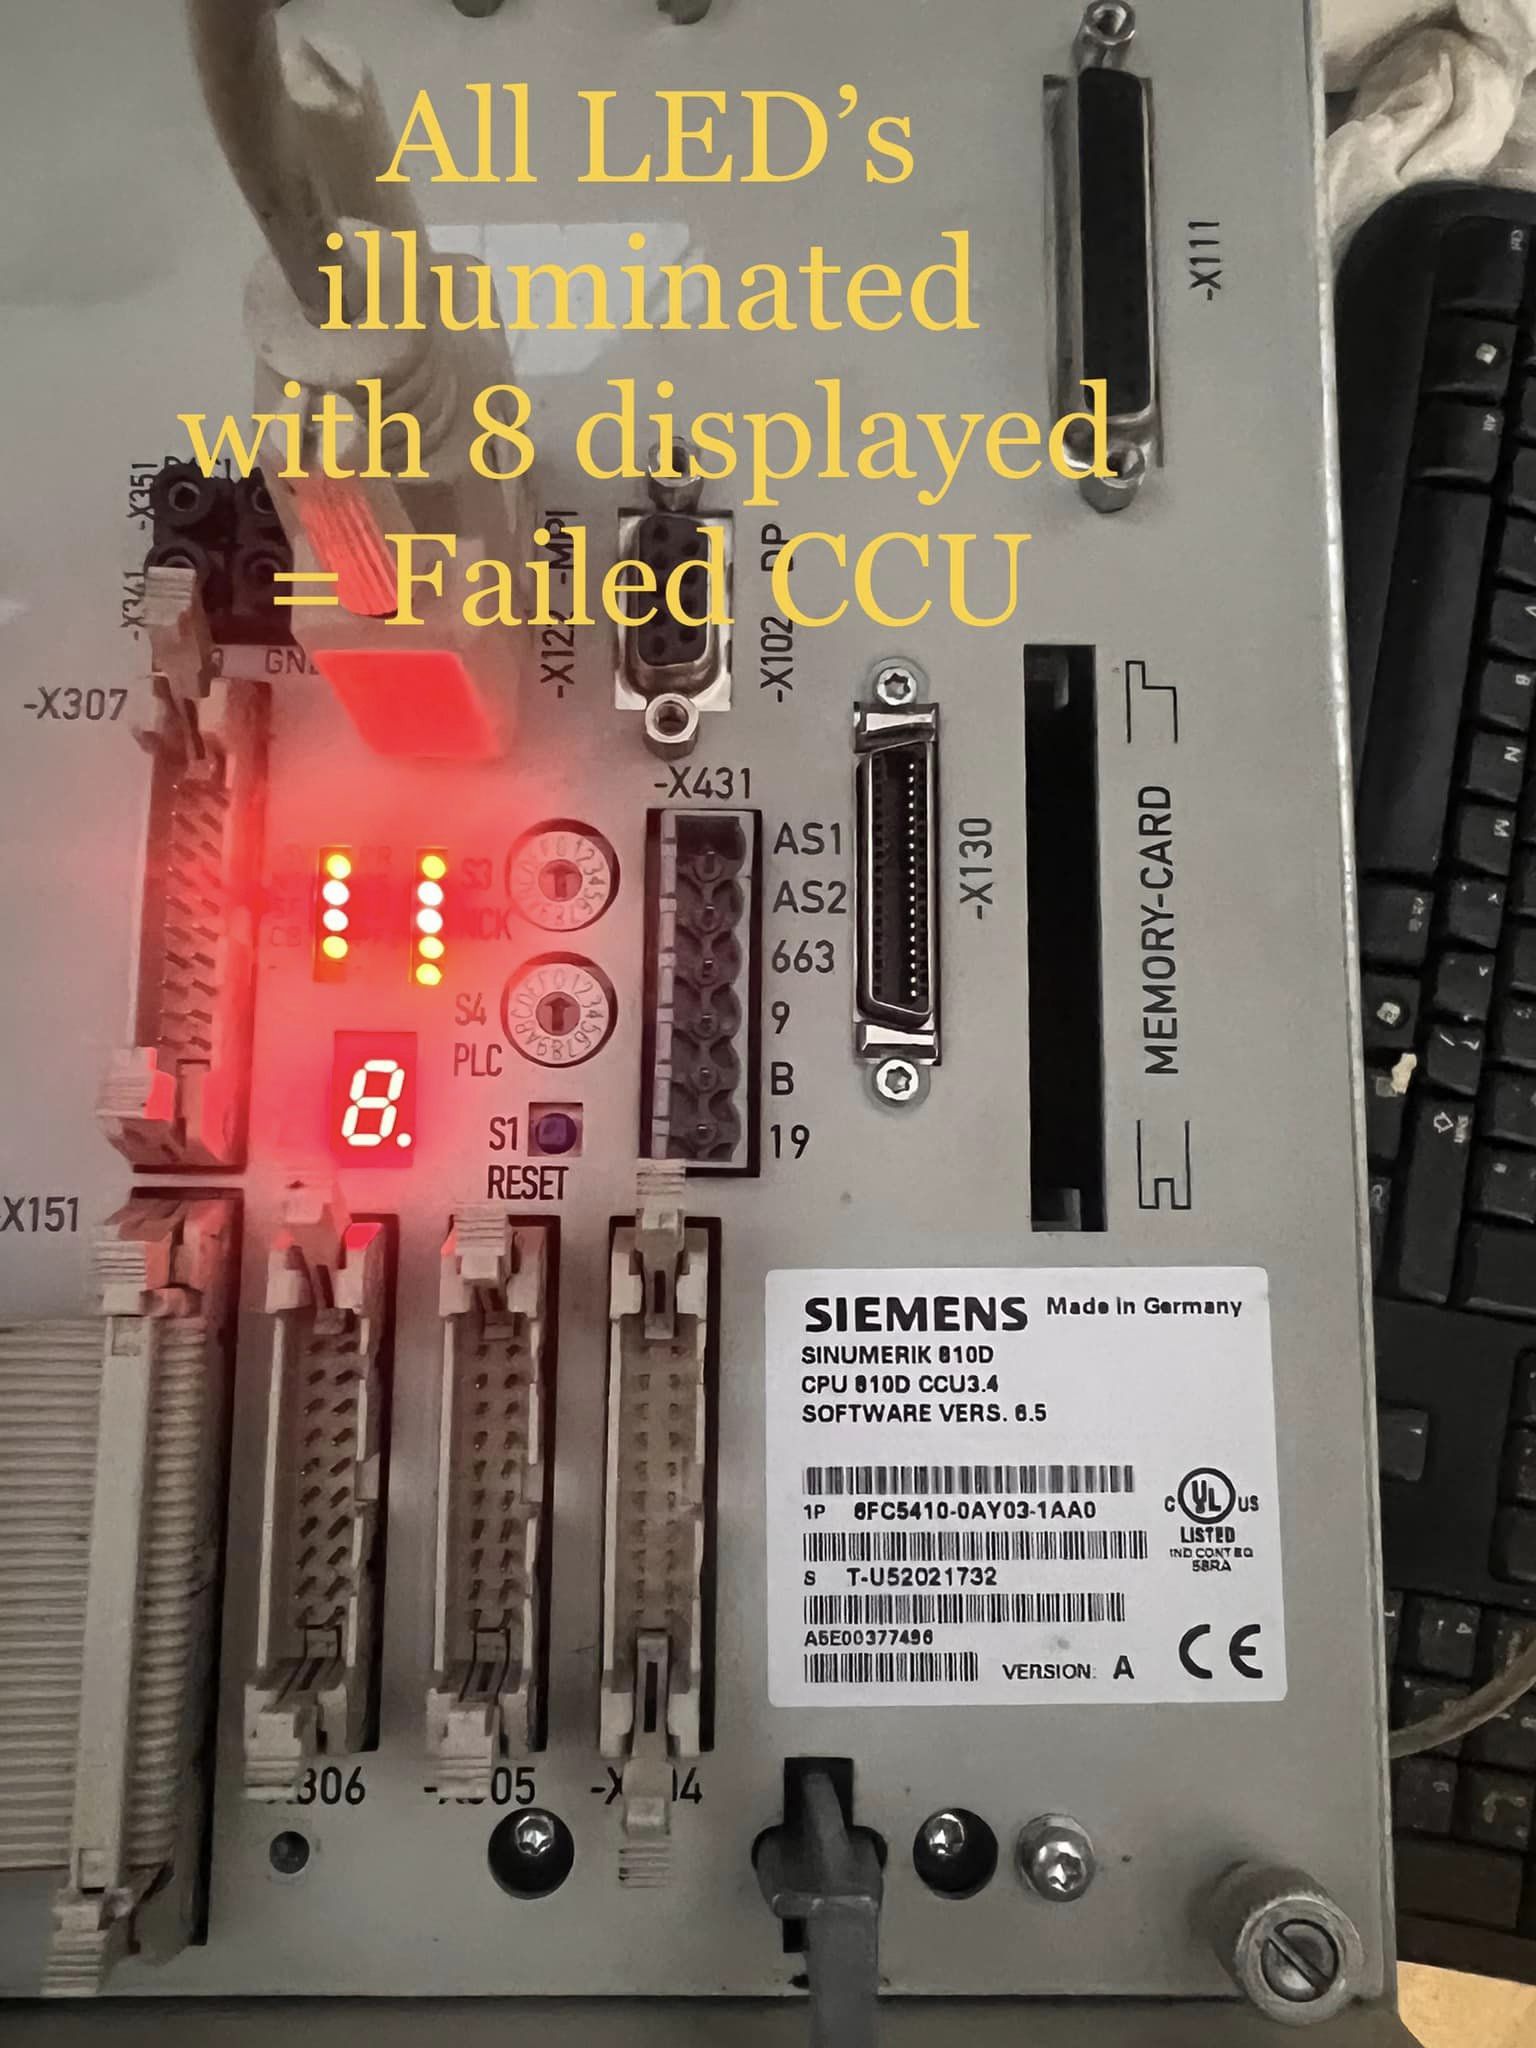 Siemens 810D control